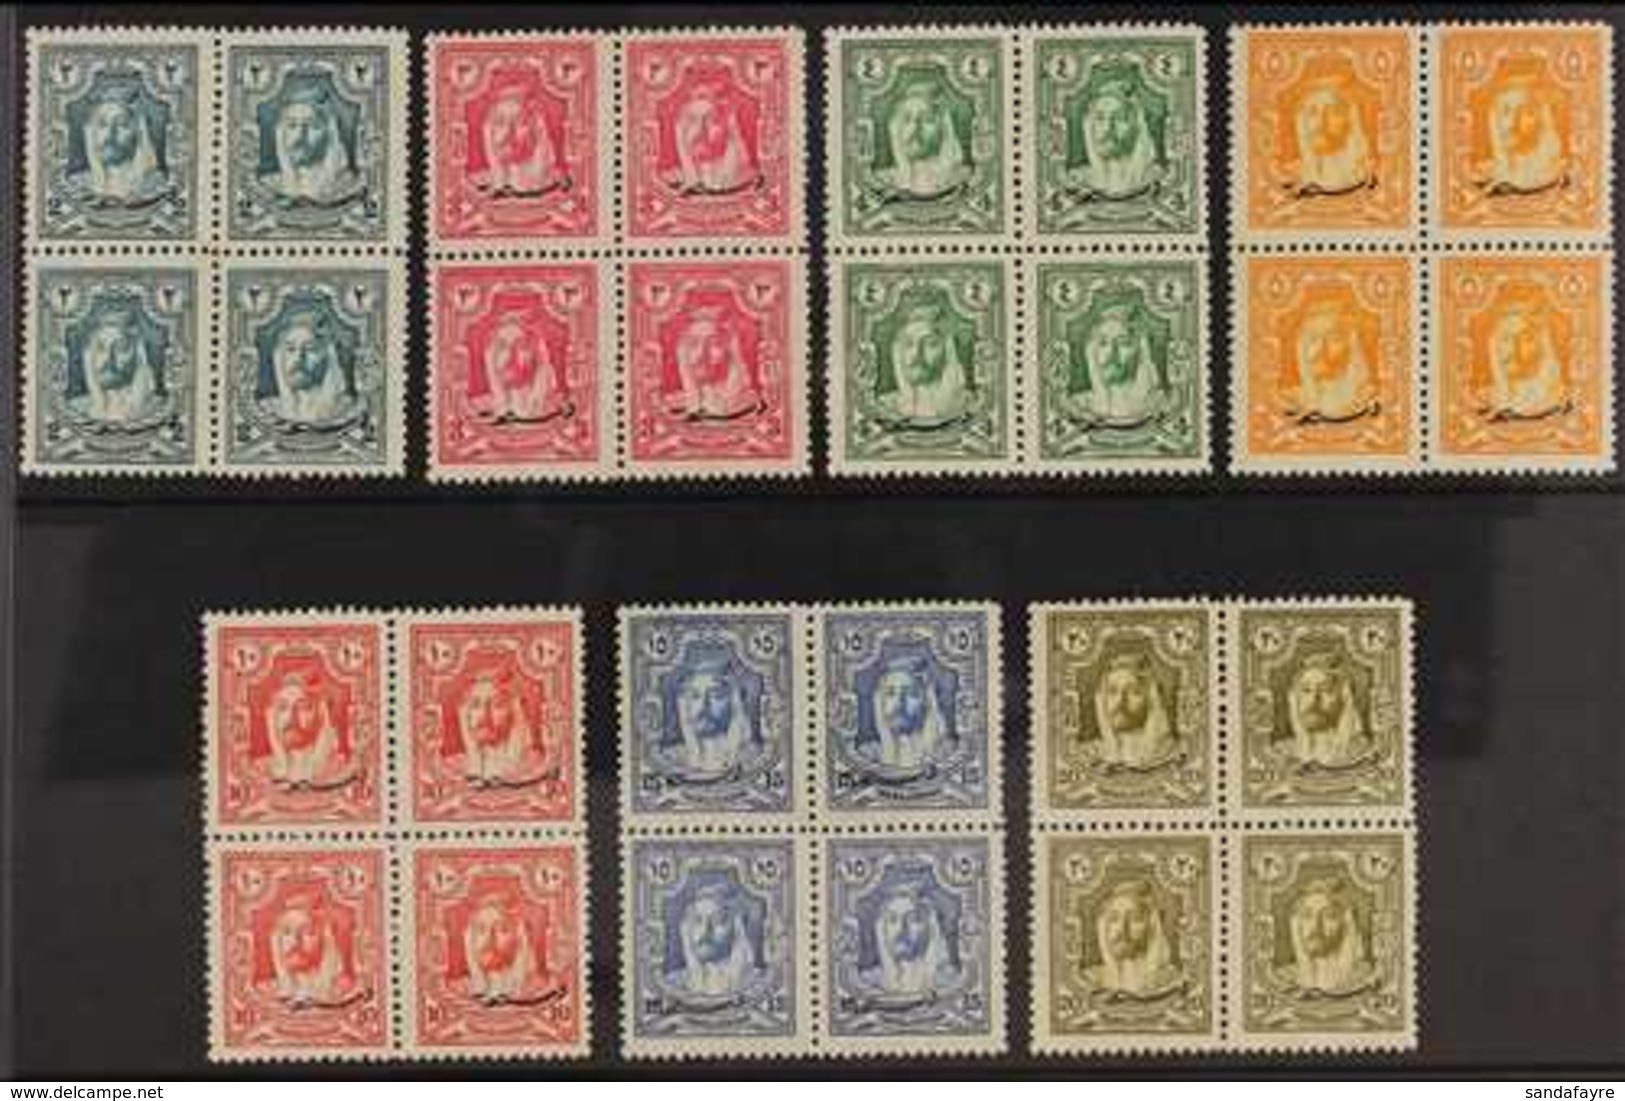 1928  New Constitution Overprints Complete Set To 20m, SG 172/78, Superb Never Hinged Mint BLOCKS Of 4, Very Fresh. (7 B - Jordanië